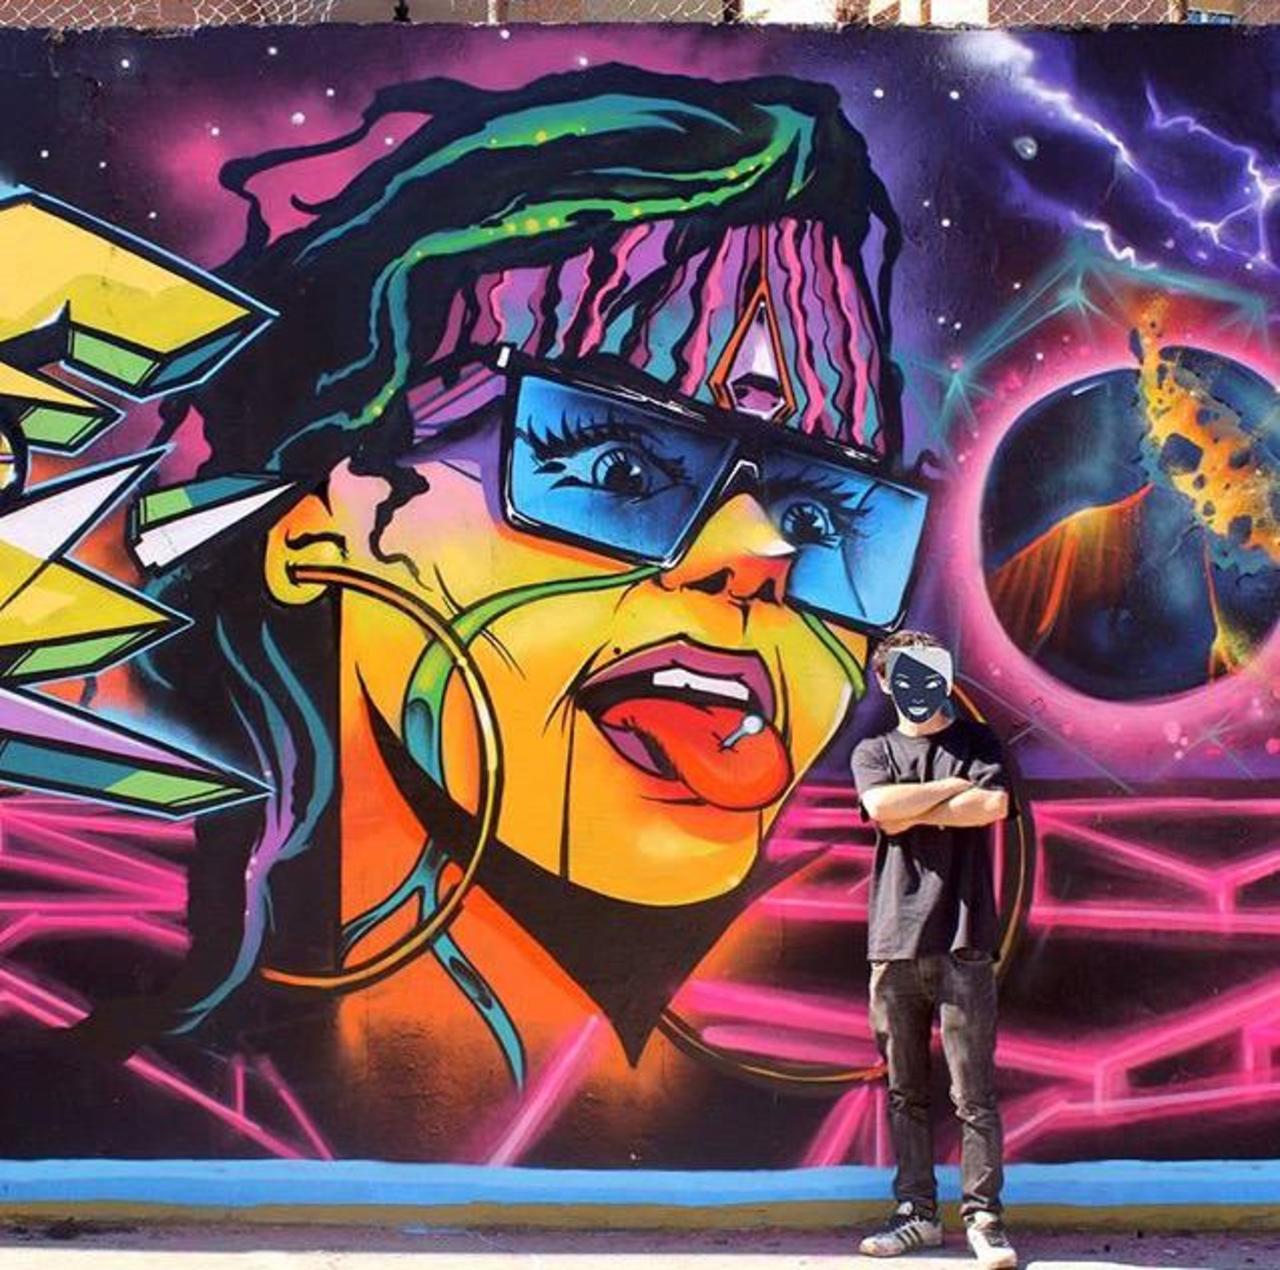 Brilliant new Street Art by the artist Jaycaes

#art #graffiti #mural #streetart http://t.co/DmJDsfWfXm